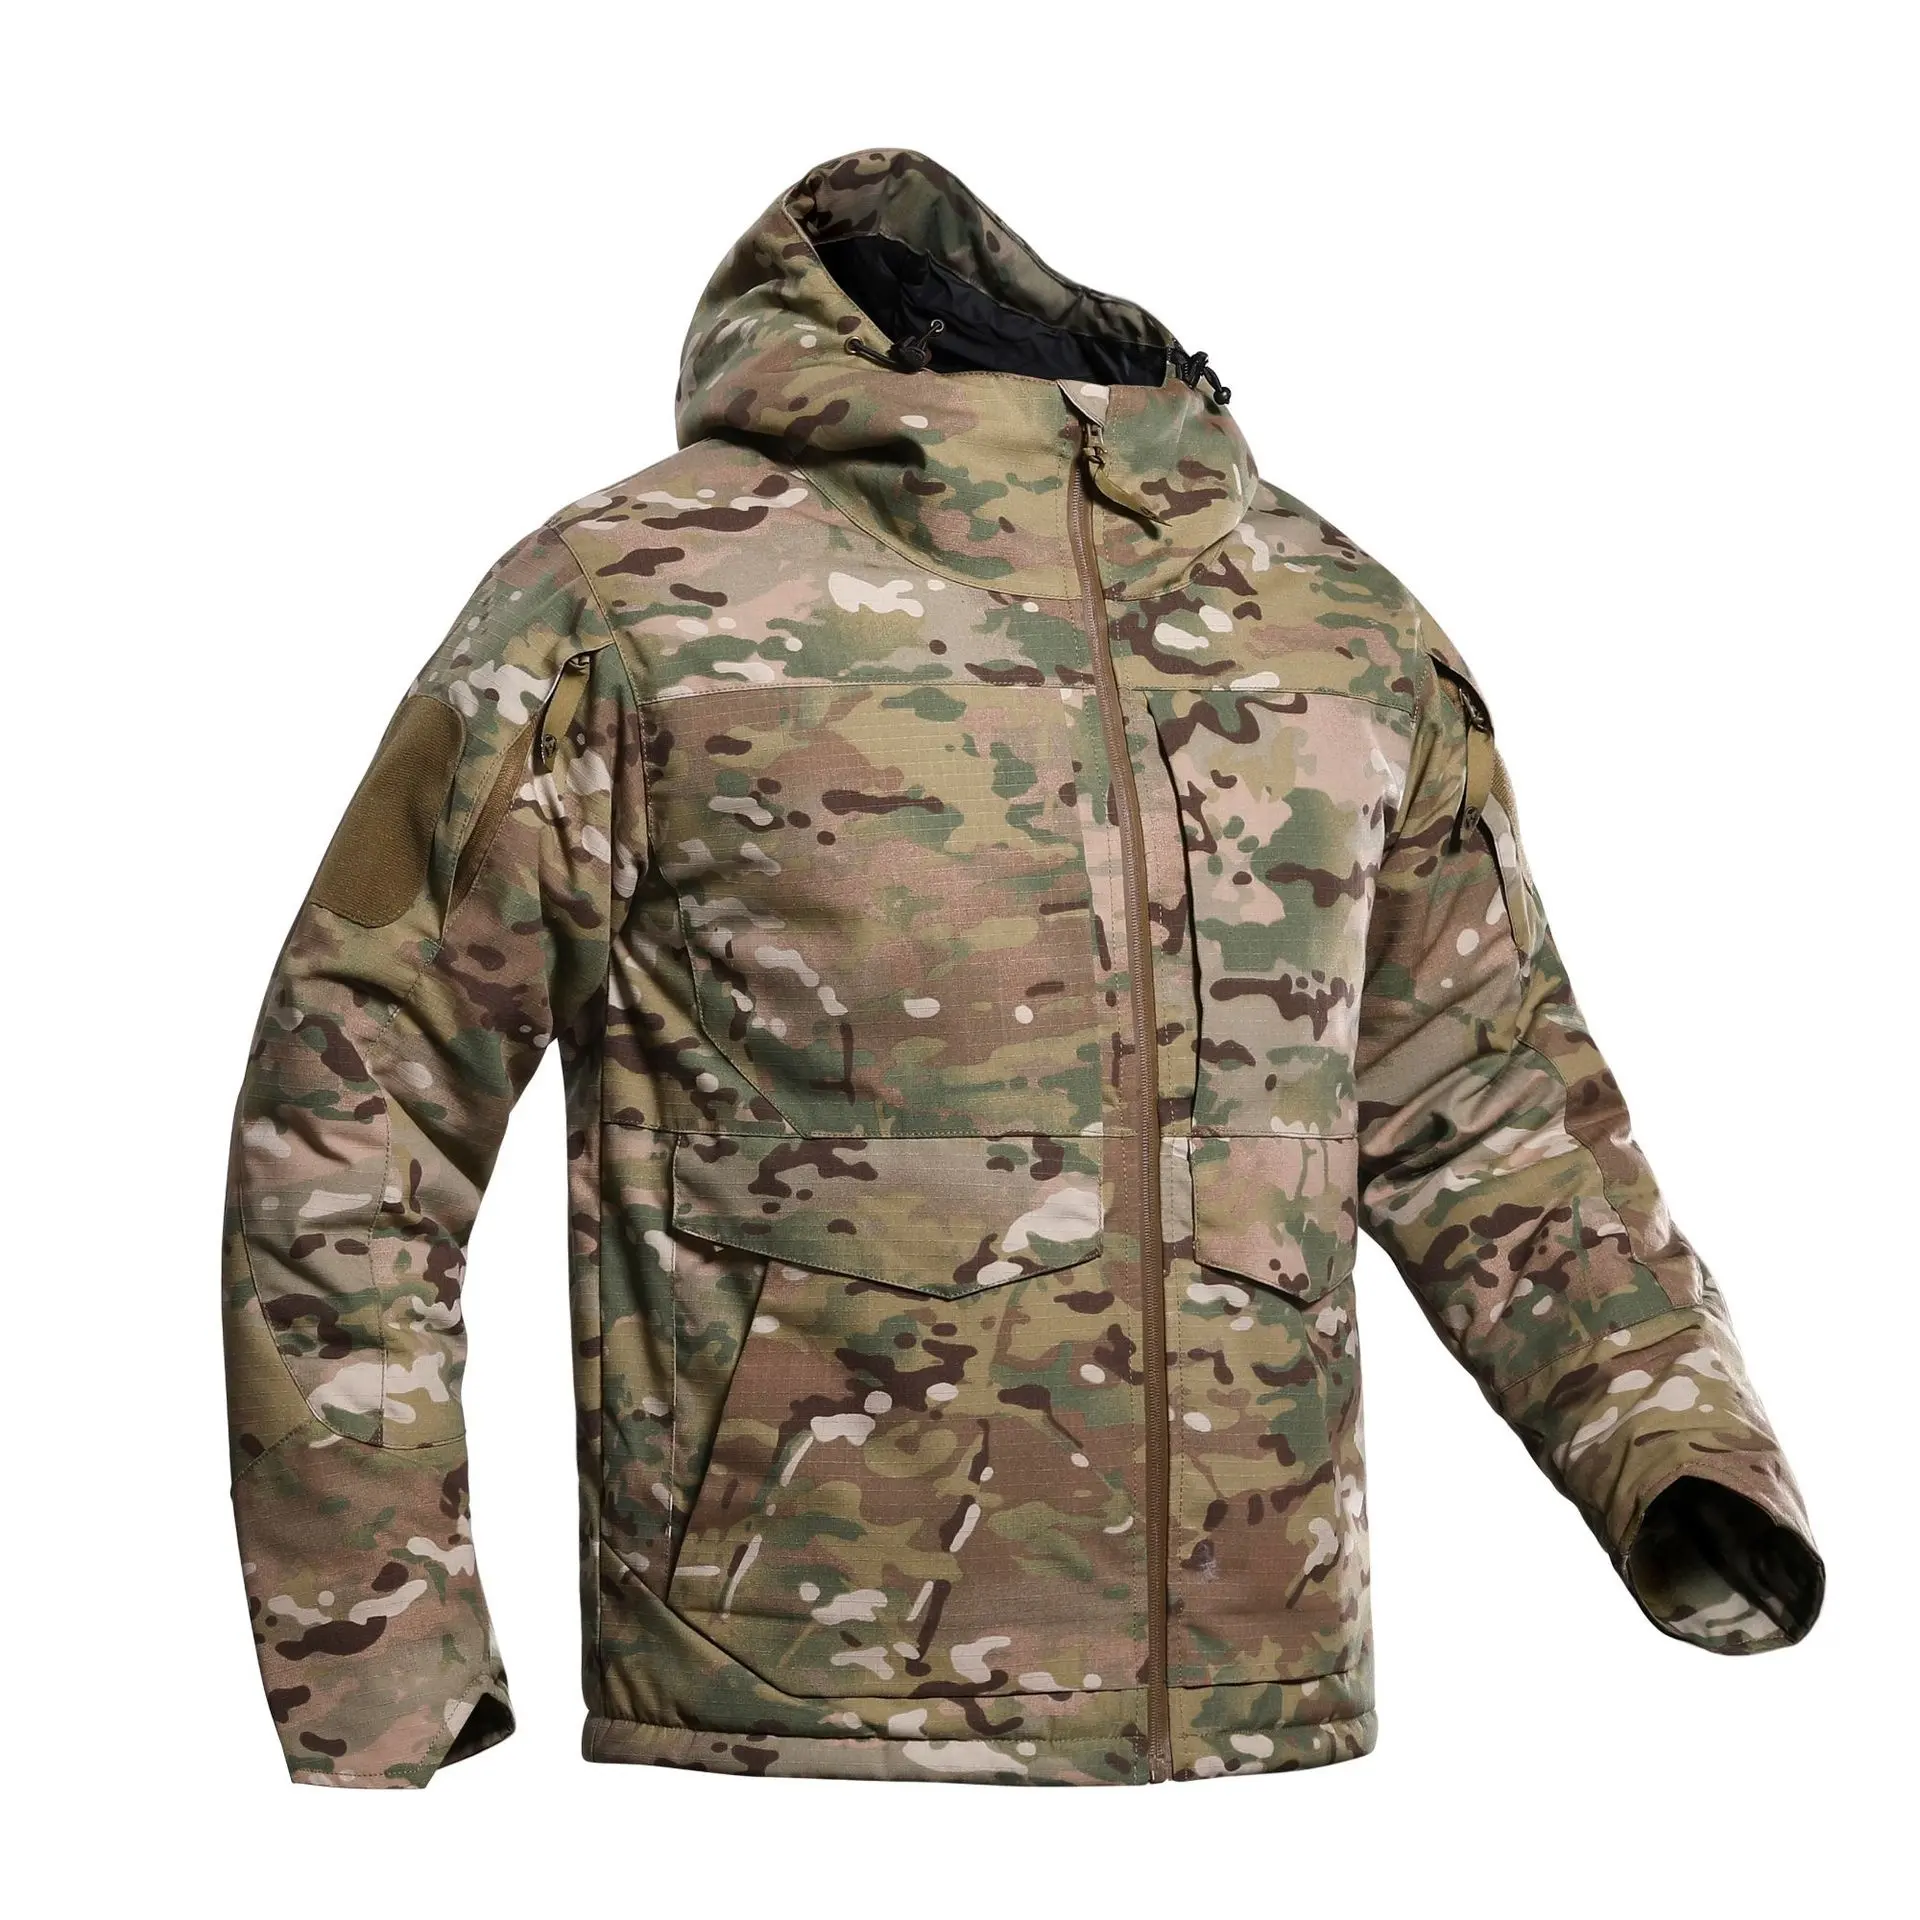 Men's outdoor waterproof camouflage training jacket and winter coat camouflage jacket